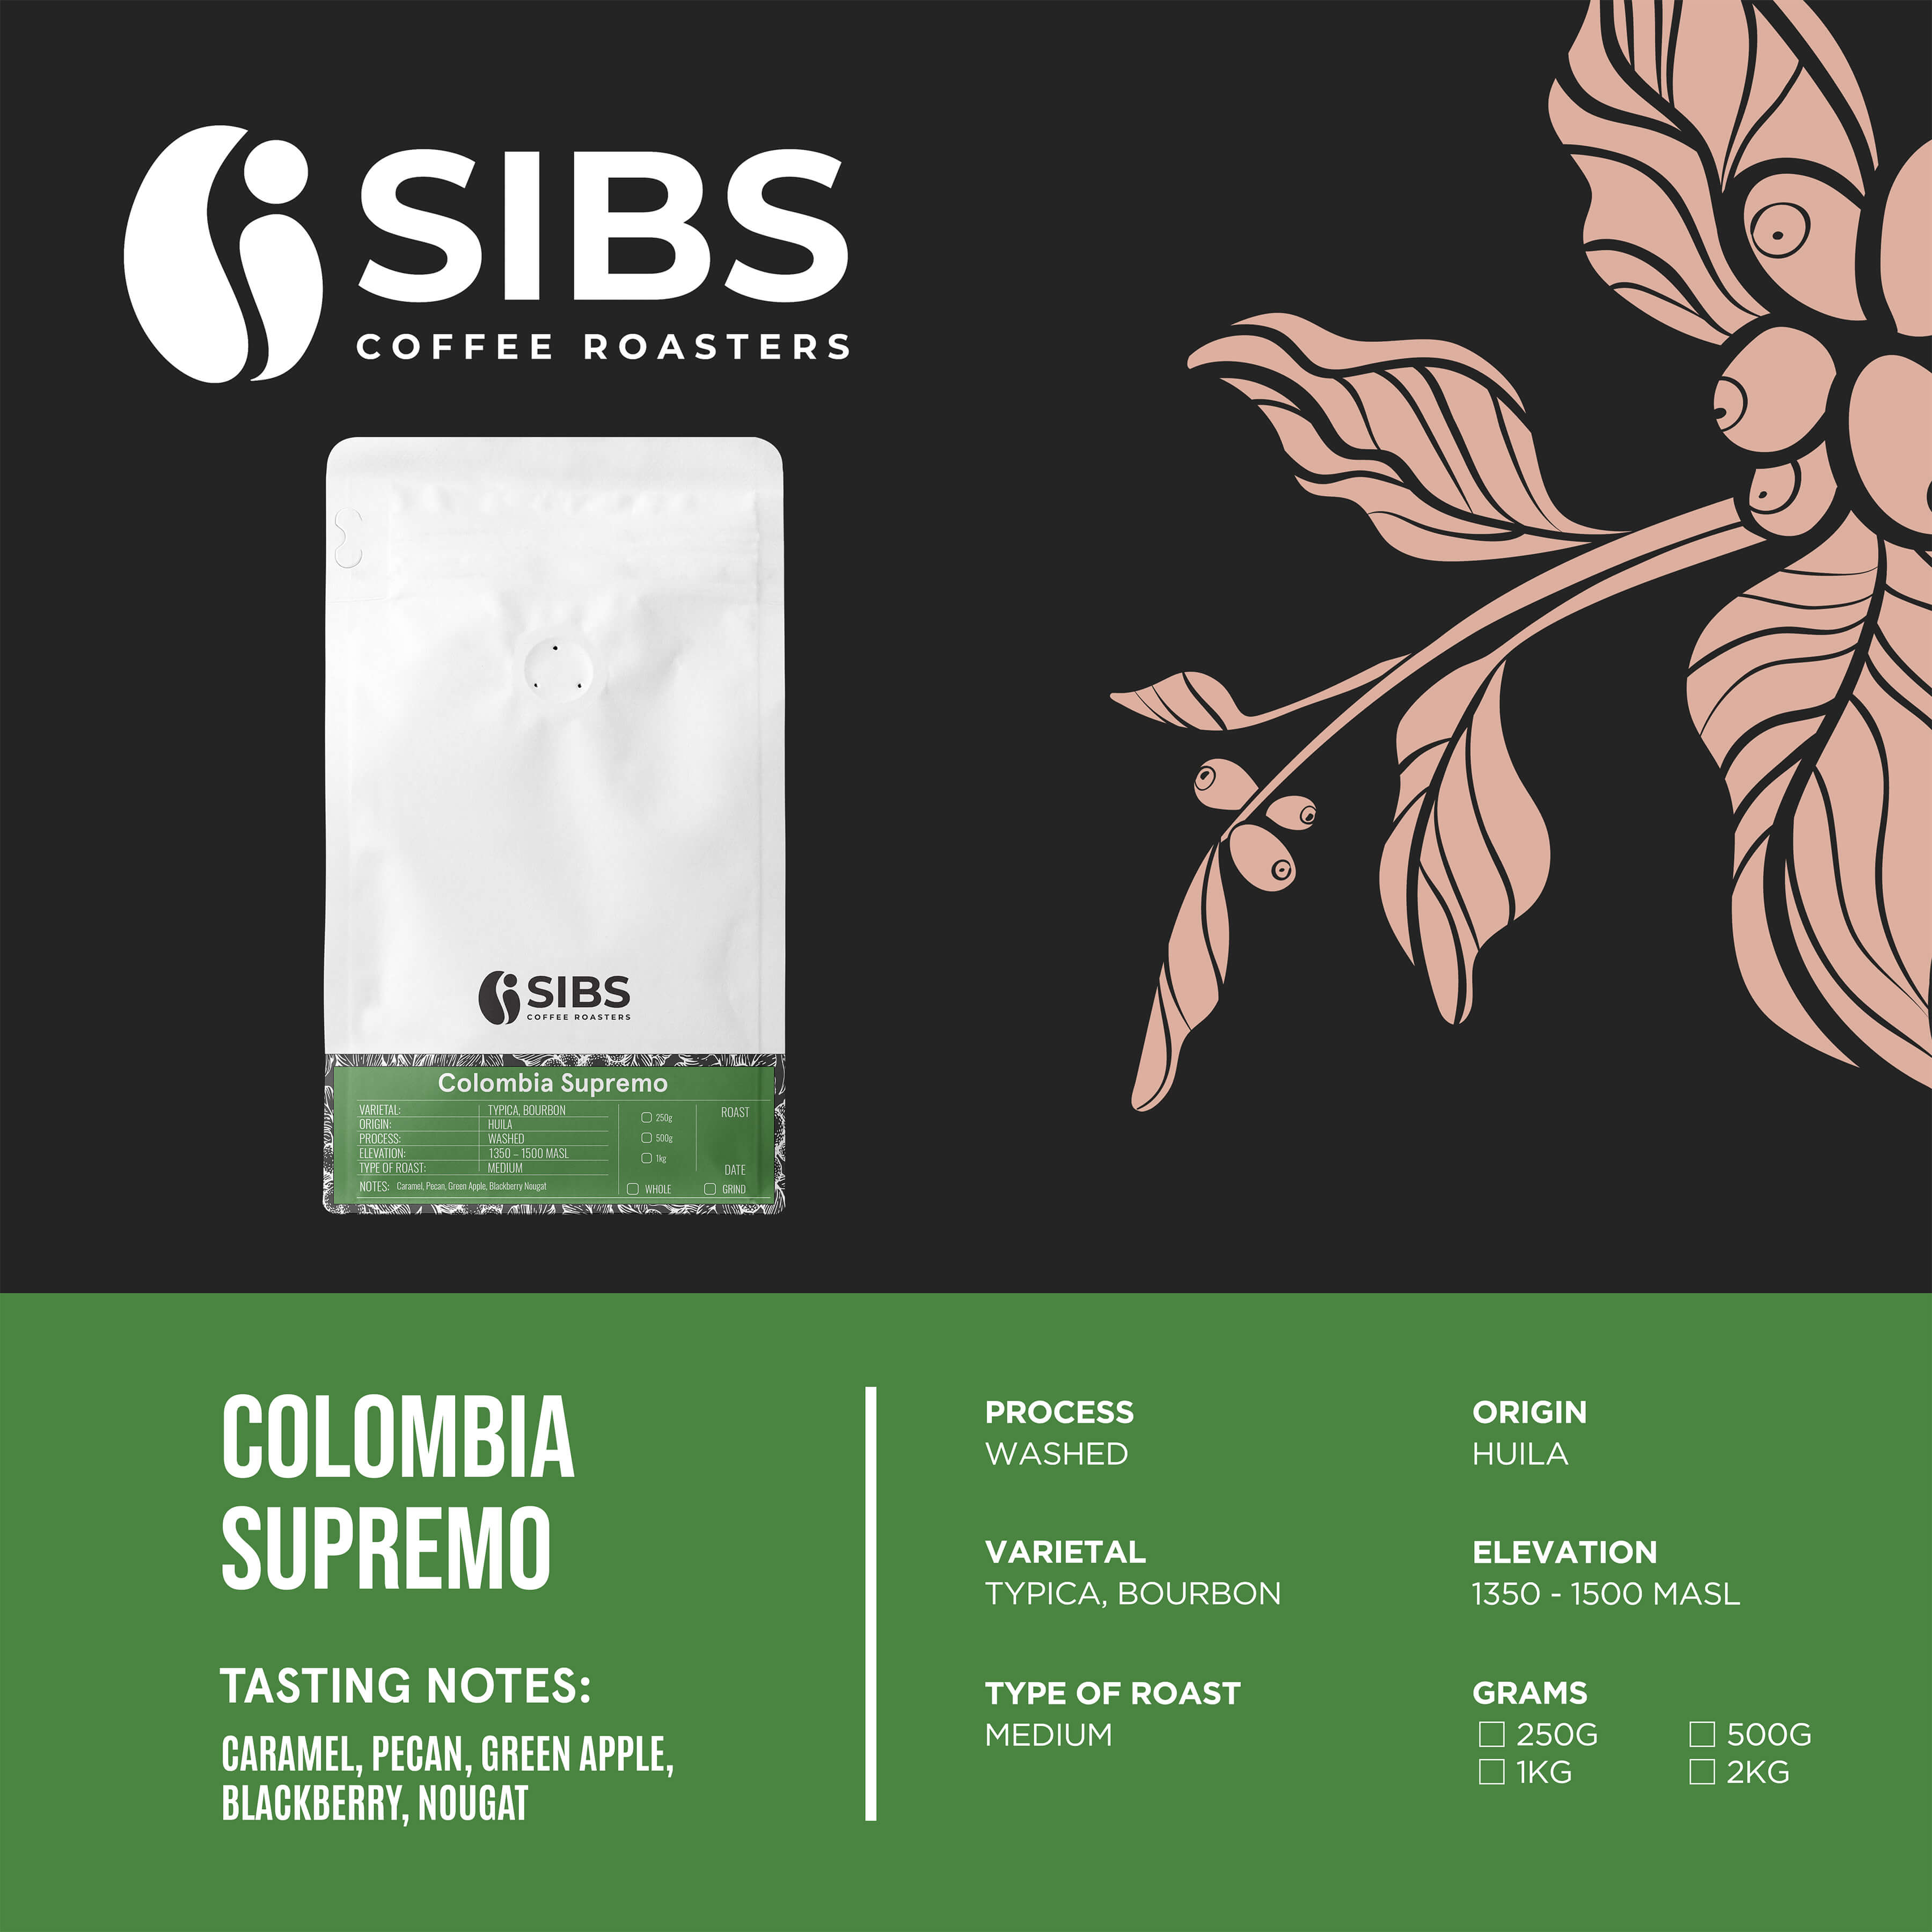 Colombia Supremo (100% Arabica) - Freshly Roasted Coffee